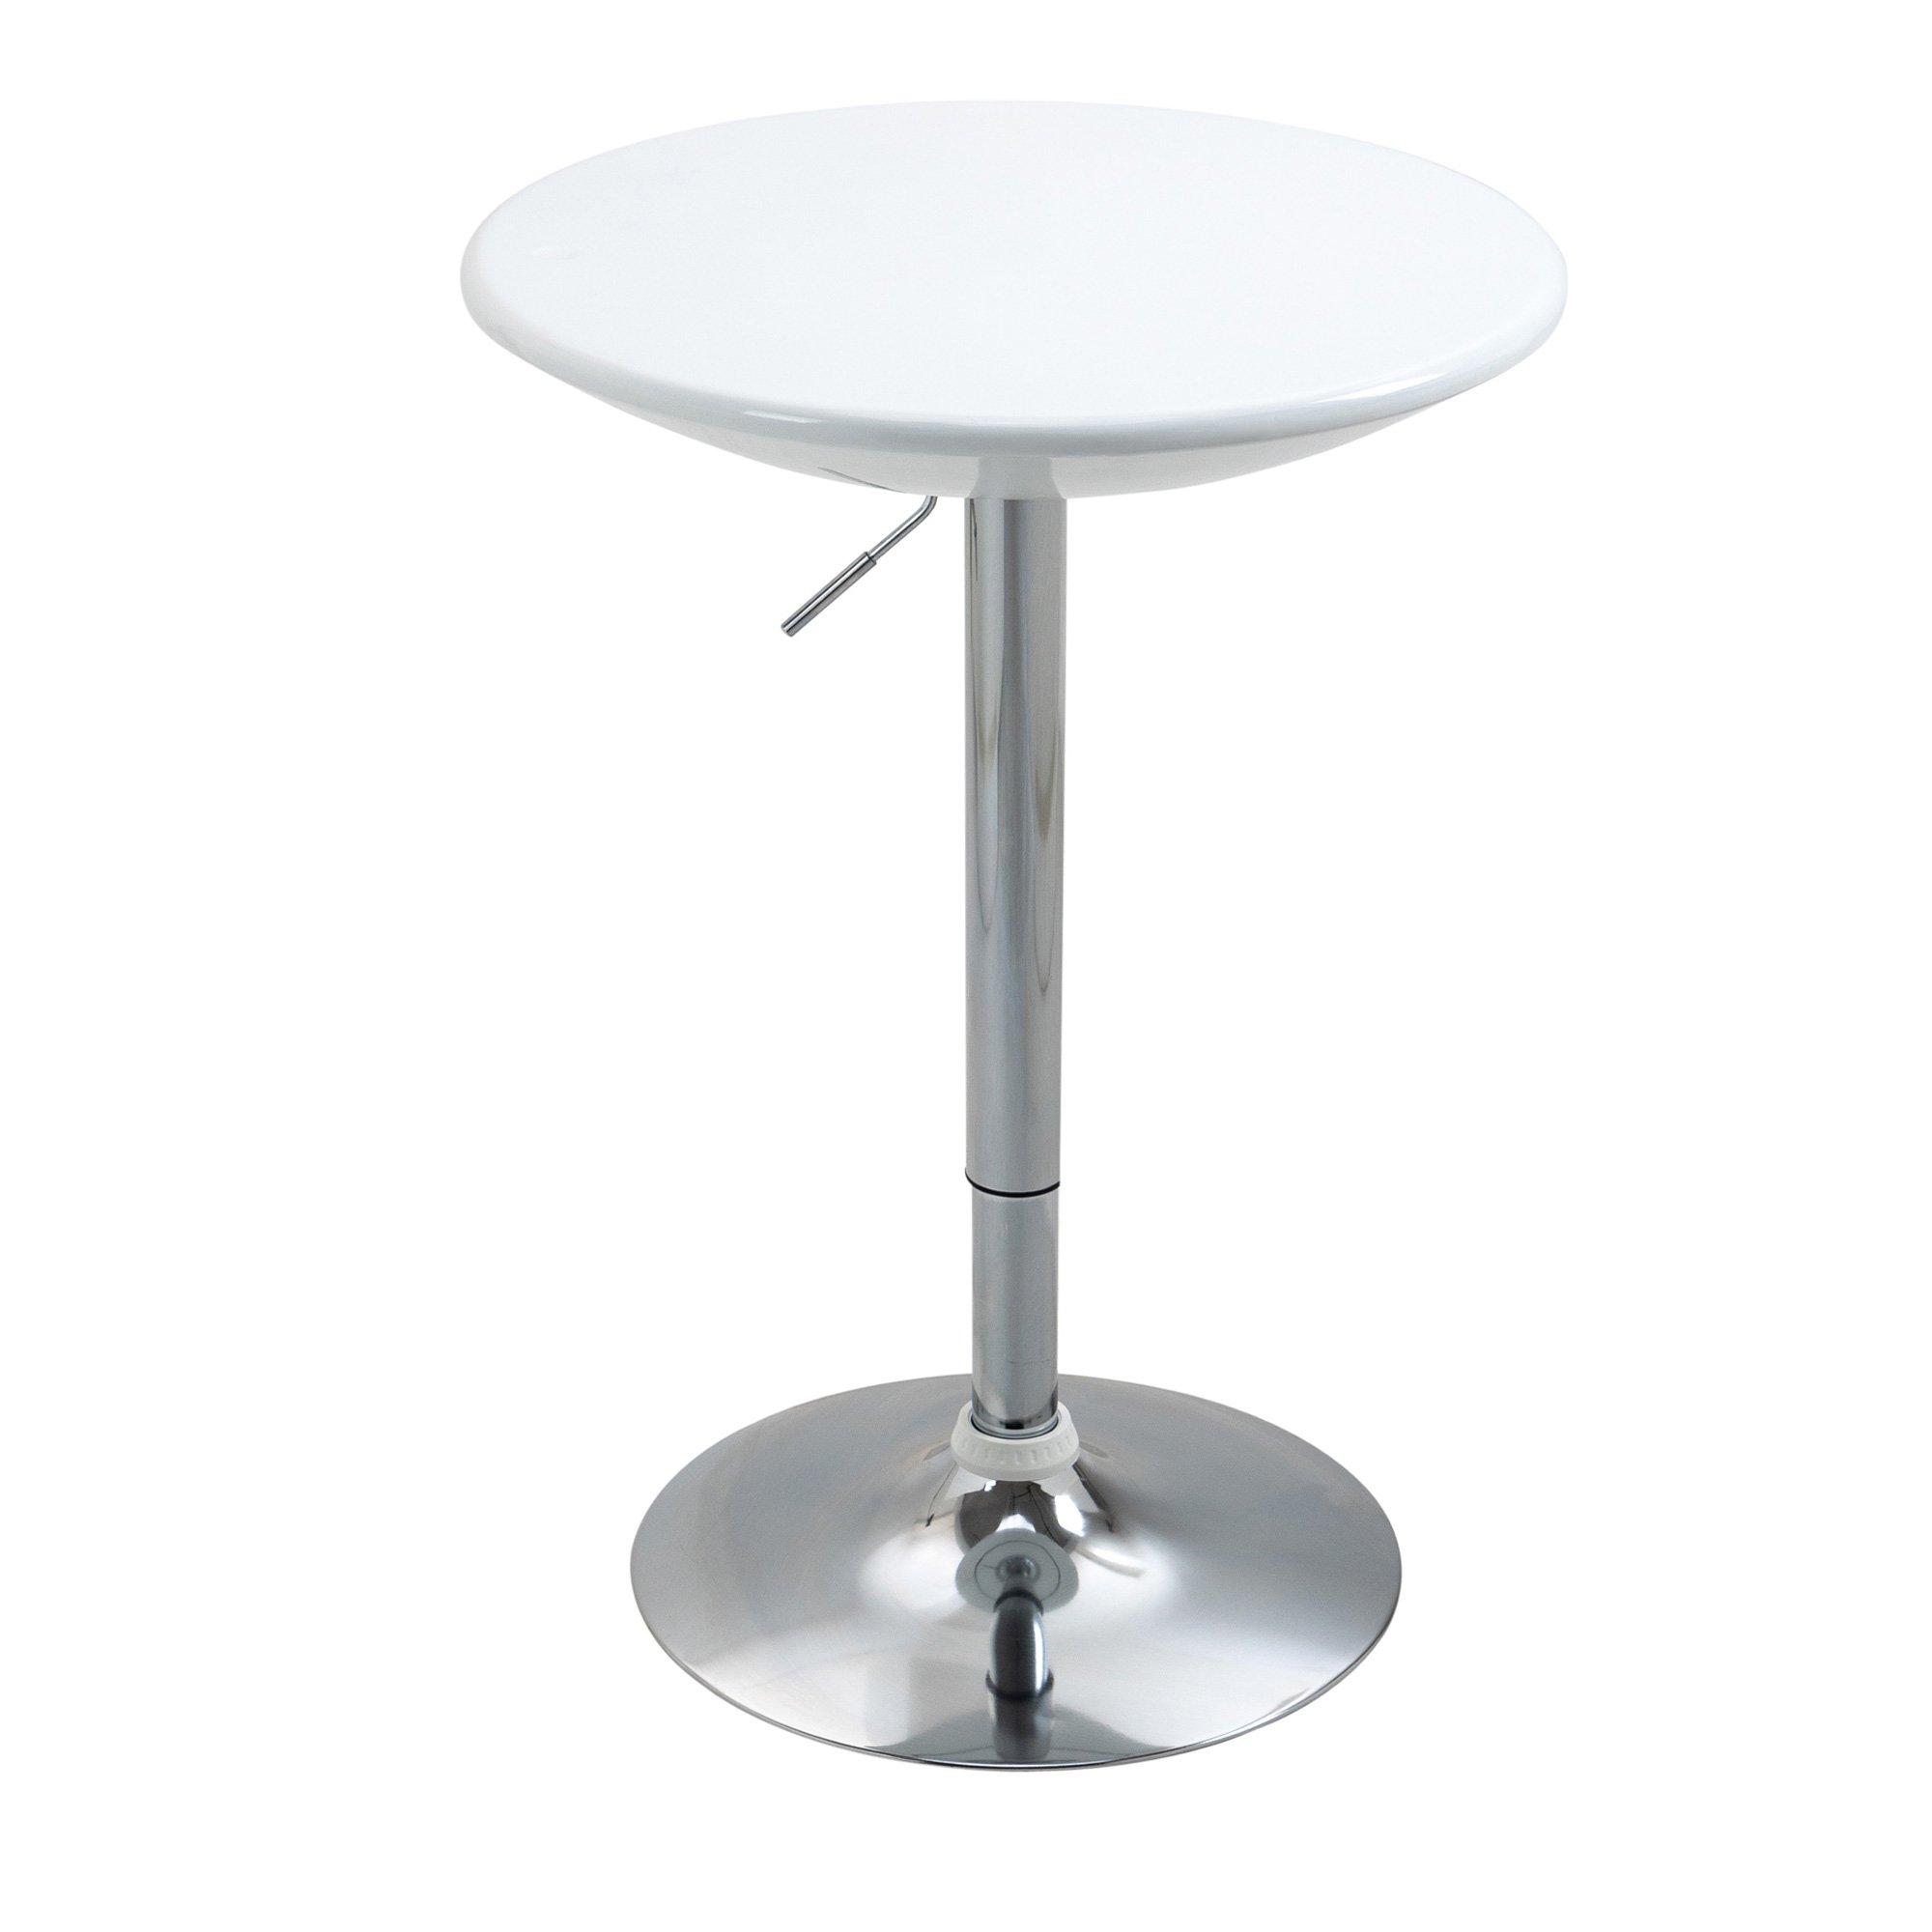 61 cm Round Indoor Home Pub Bar Table Adjustable Bistro Counter Round